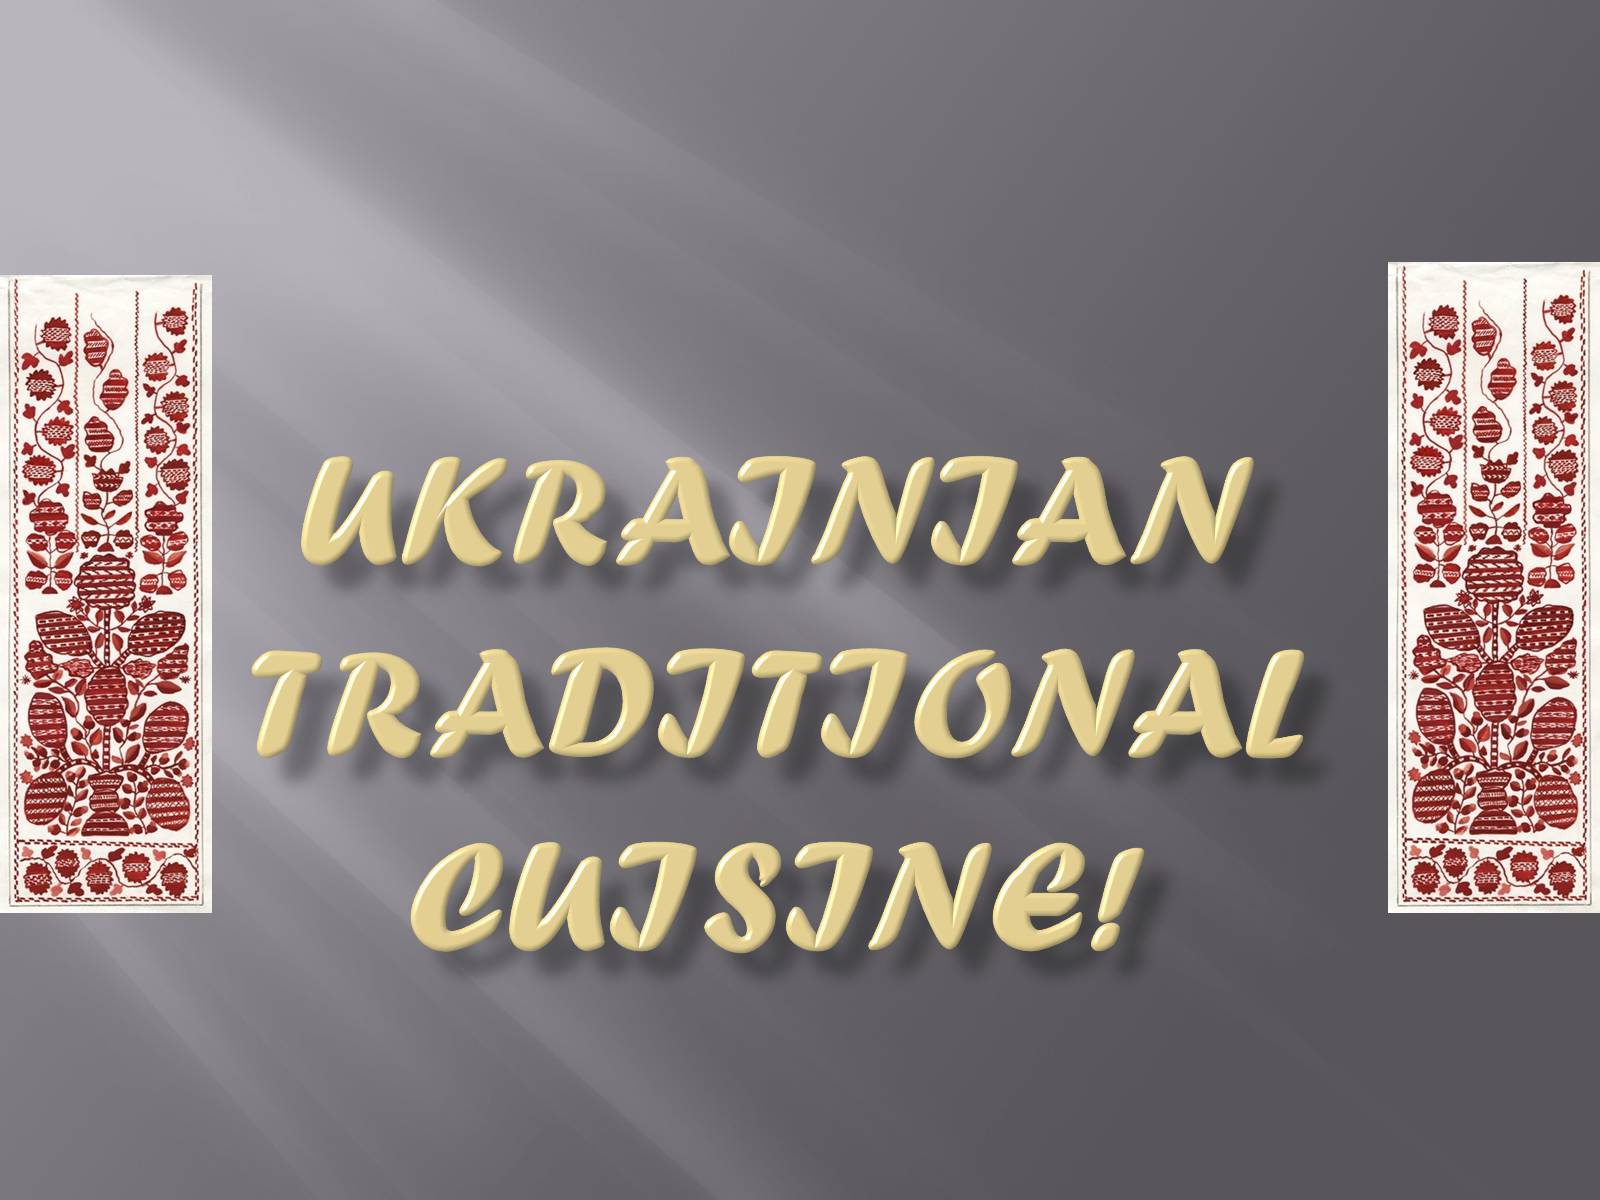 Презентація на тему «Ukrainian traditional cuisine!» - Слайд #1